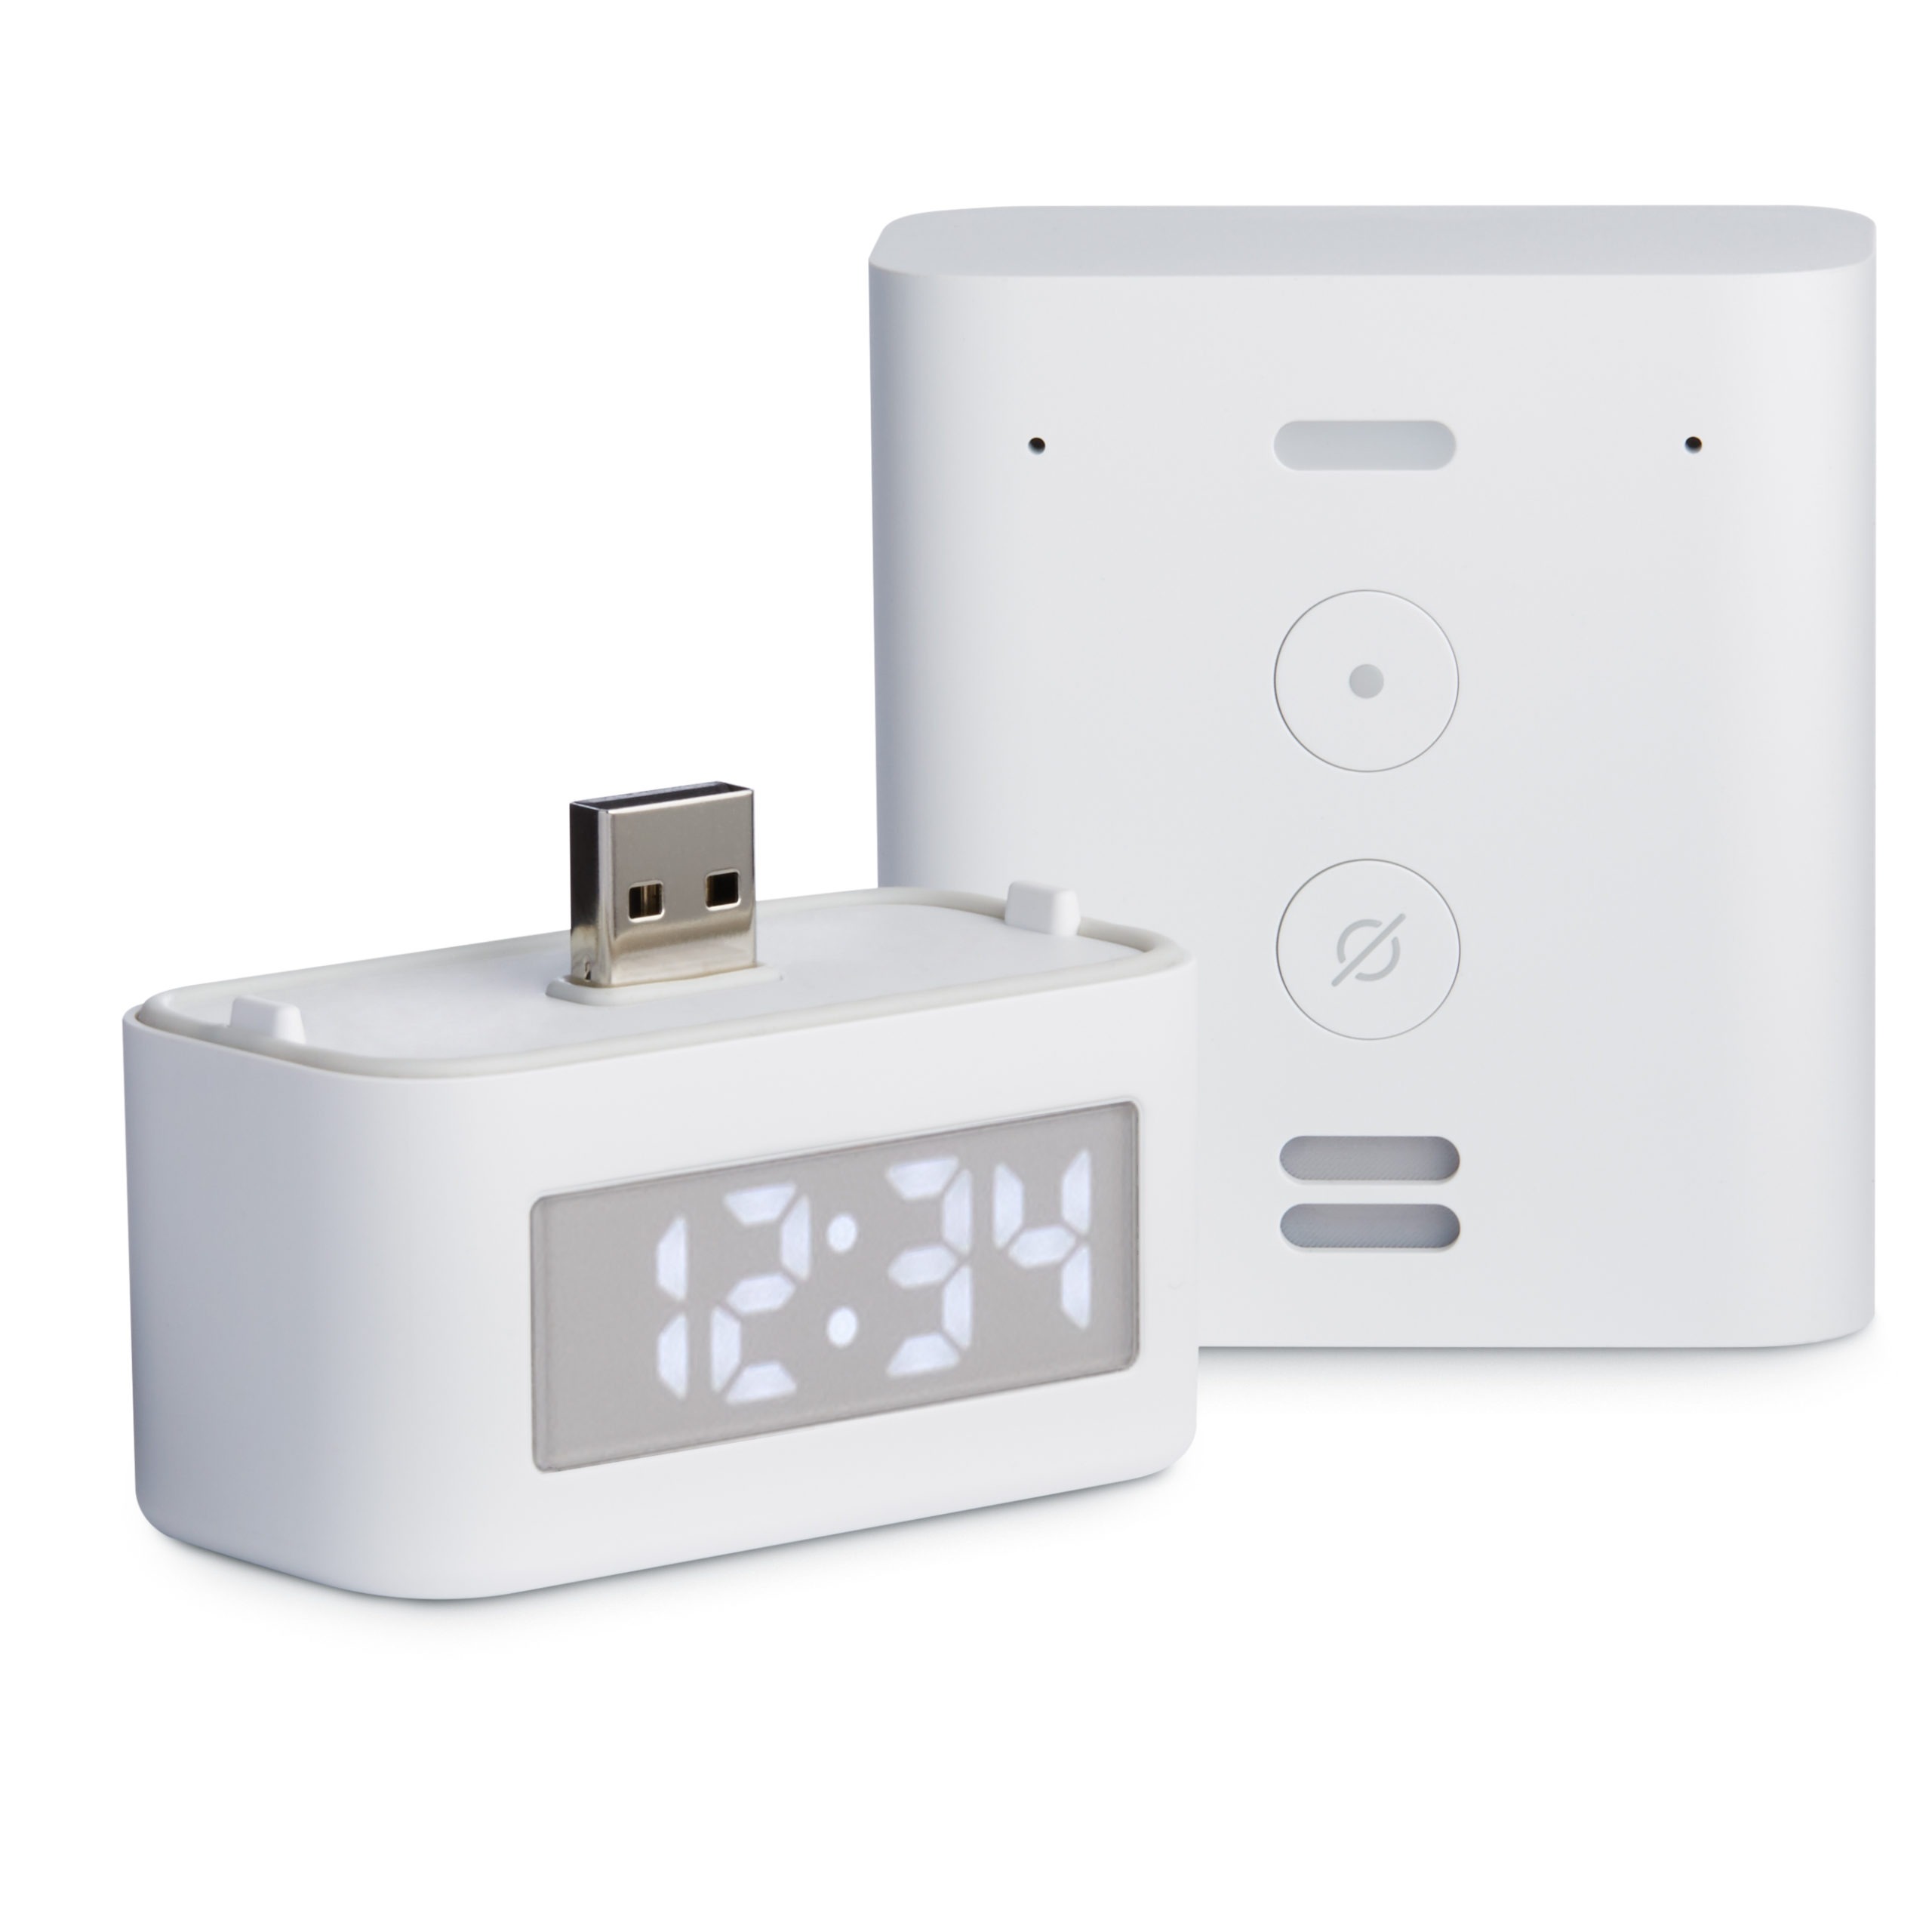 Echo Flex and Smart Clock Product 1